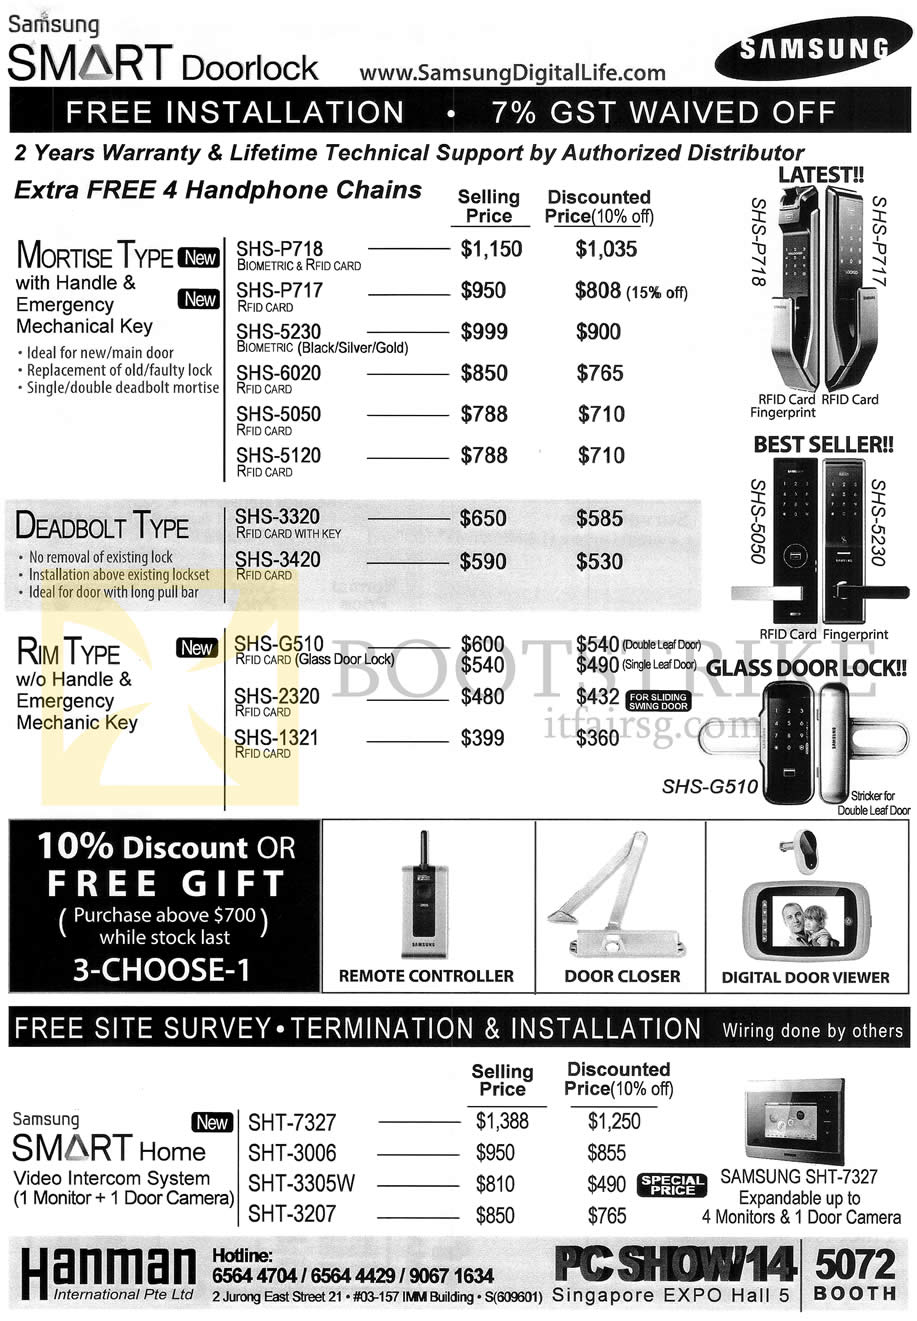 PC SHOW 2014 price list image brochure of Hanman Samsung Price List Smart Digital Door Locks Mortise, Deadbolt, Rim Types, Home Video Intercom System